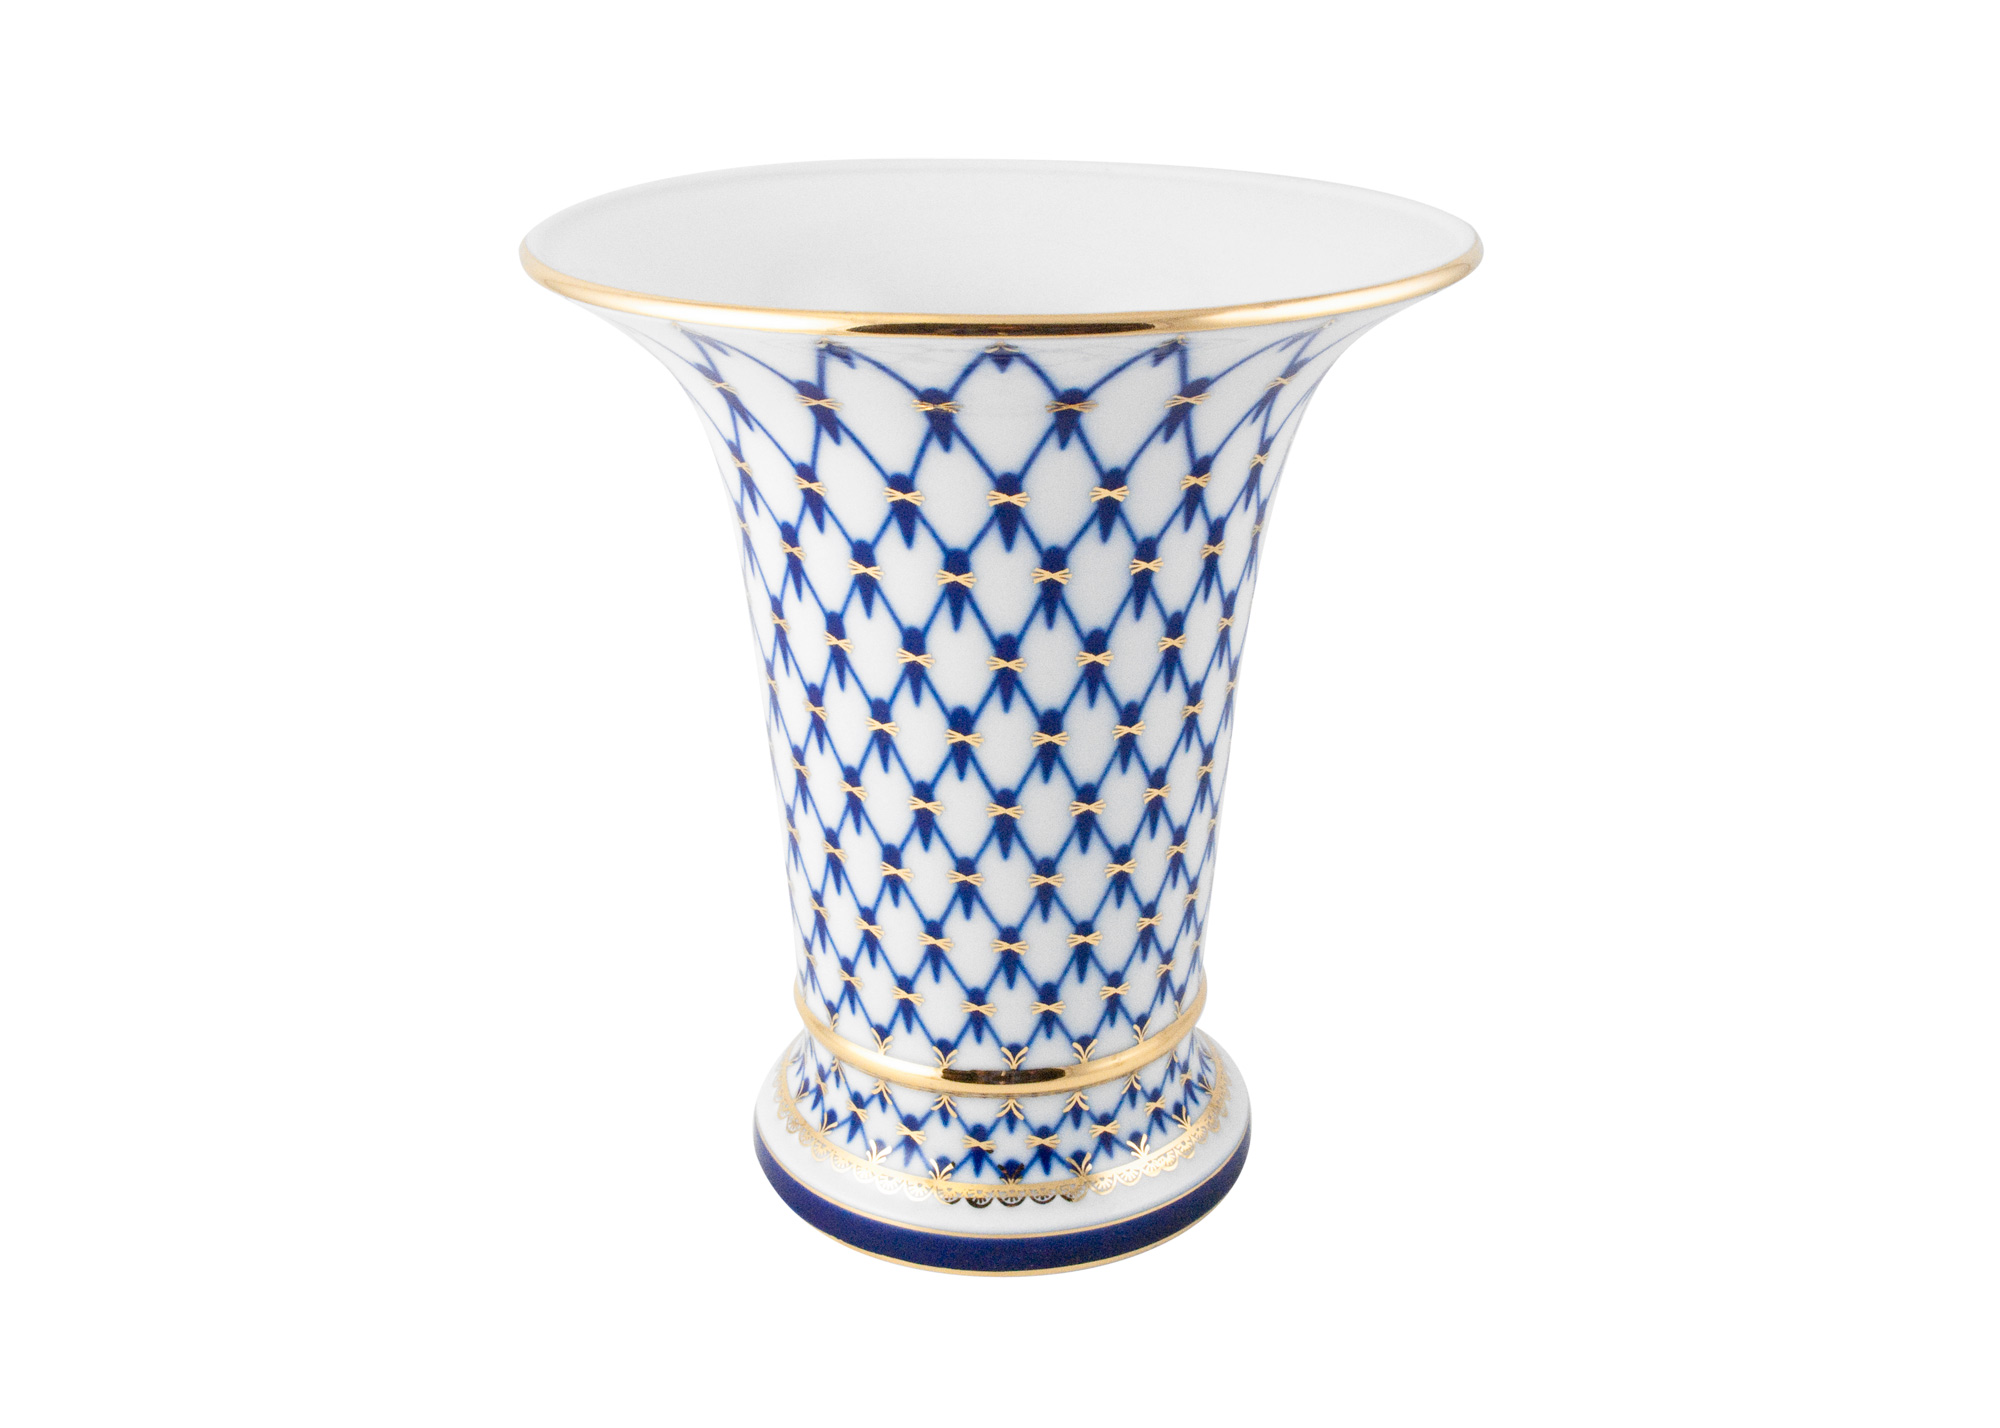 Buy Cobalt Net Vase, Empire-style, 8" x 7" at GoldenCockerel.com